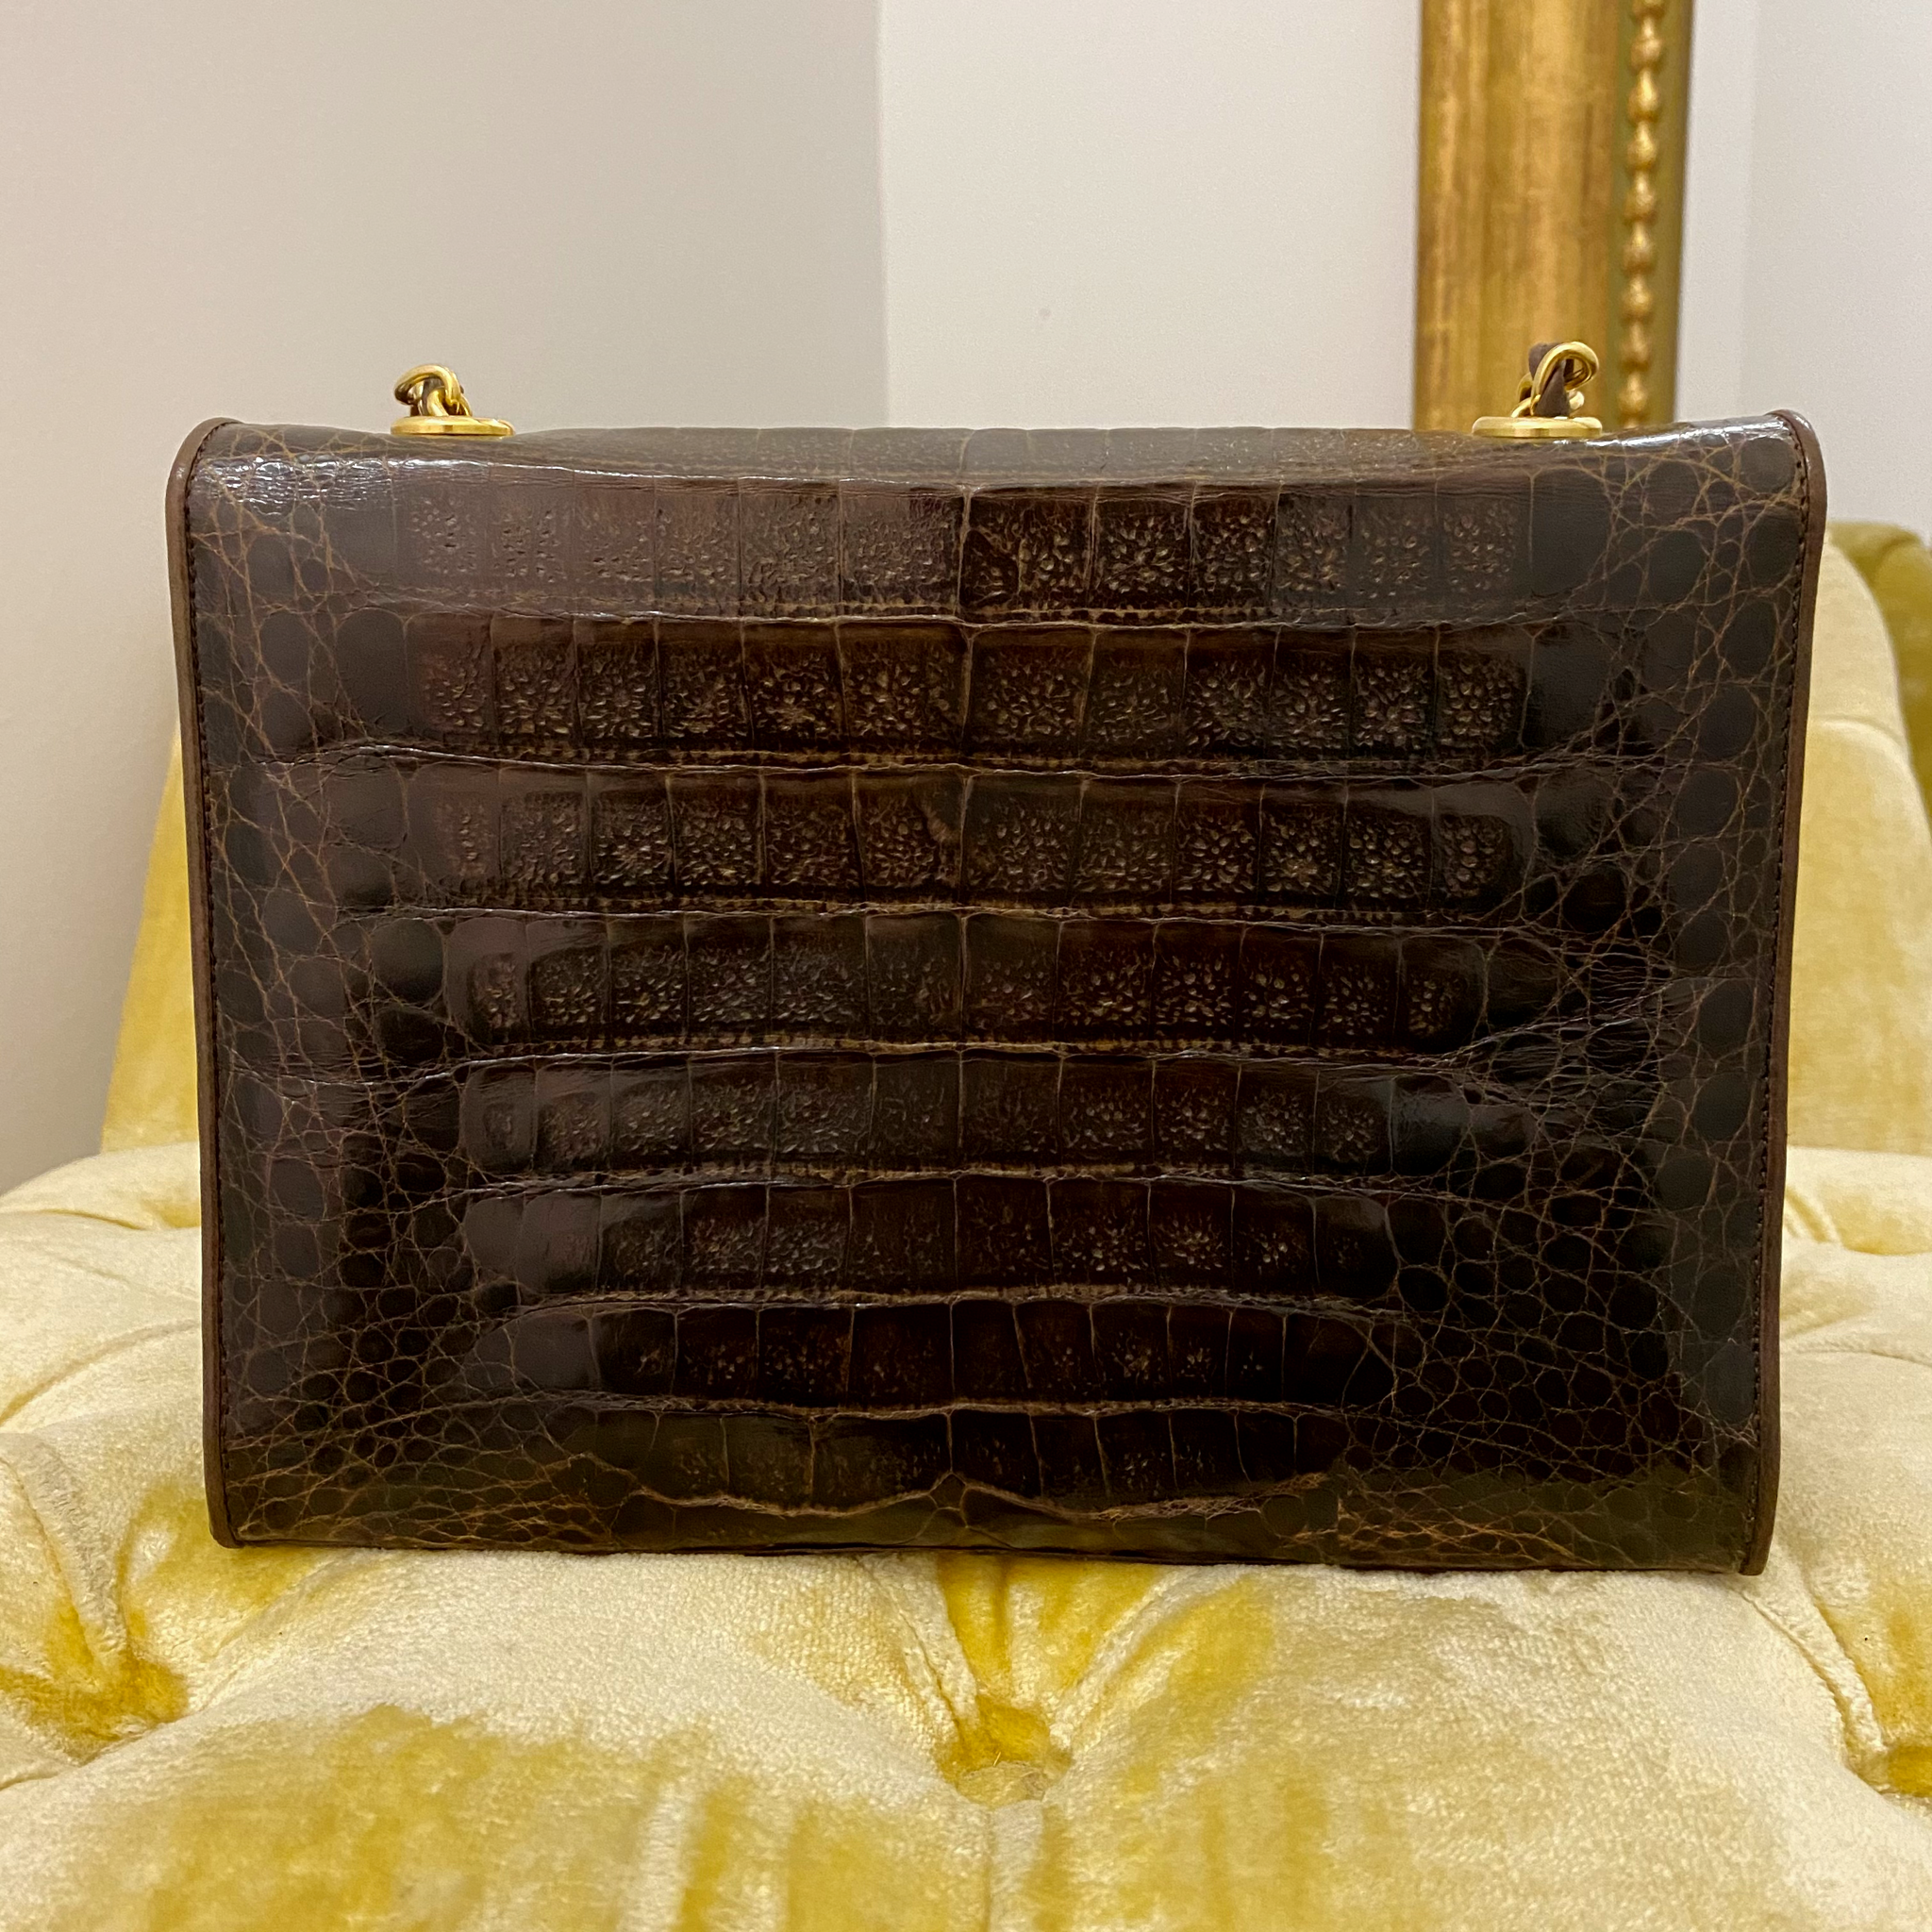 Chanel Vintage Brown Crocodile Flap Bag